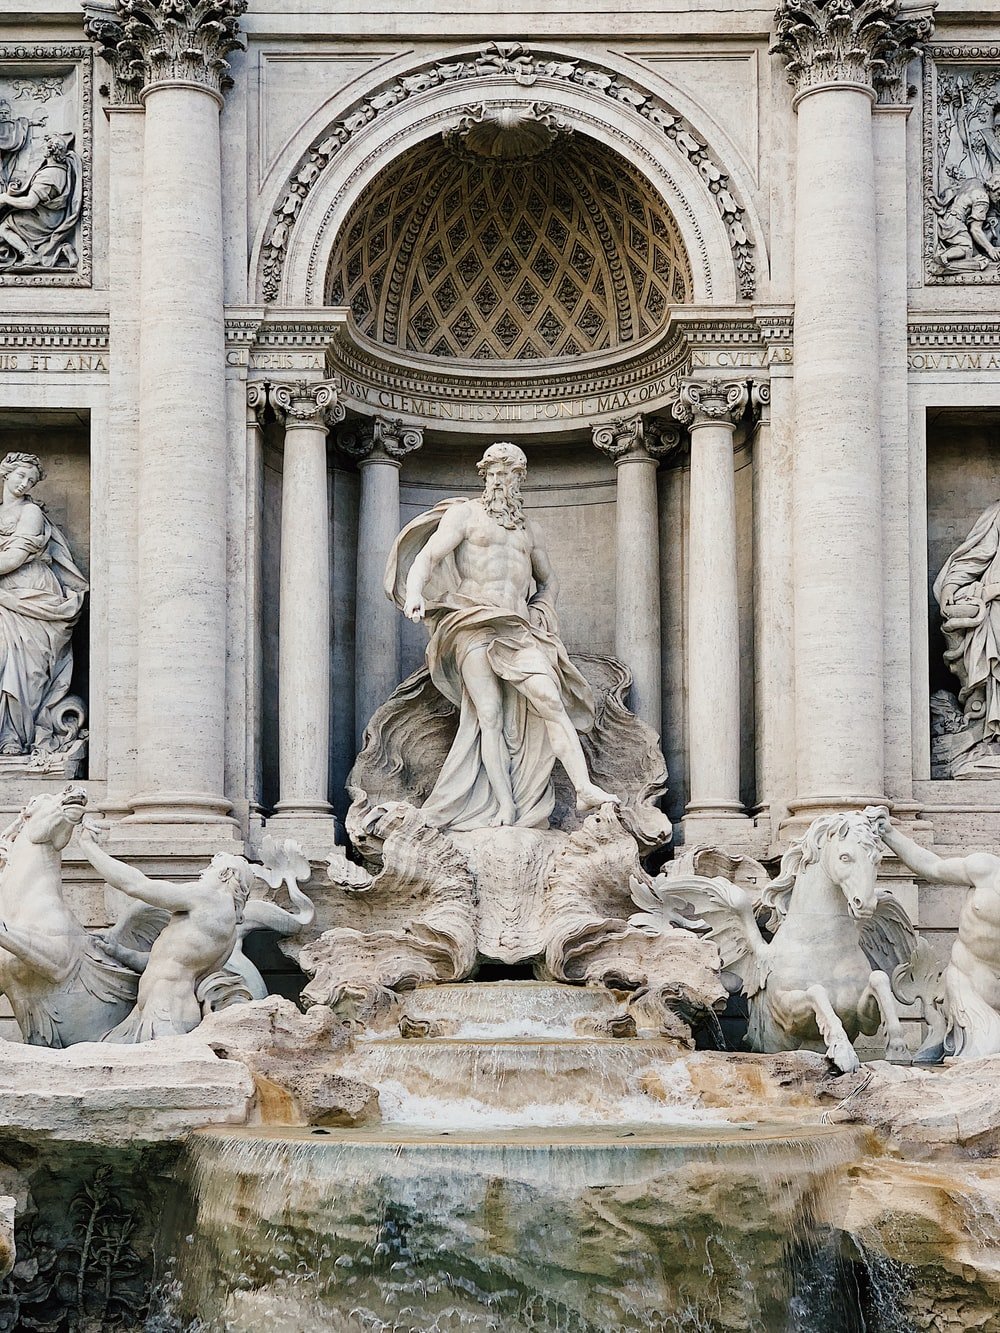 Fontana Di Trevi Picture. Download Free Image